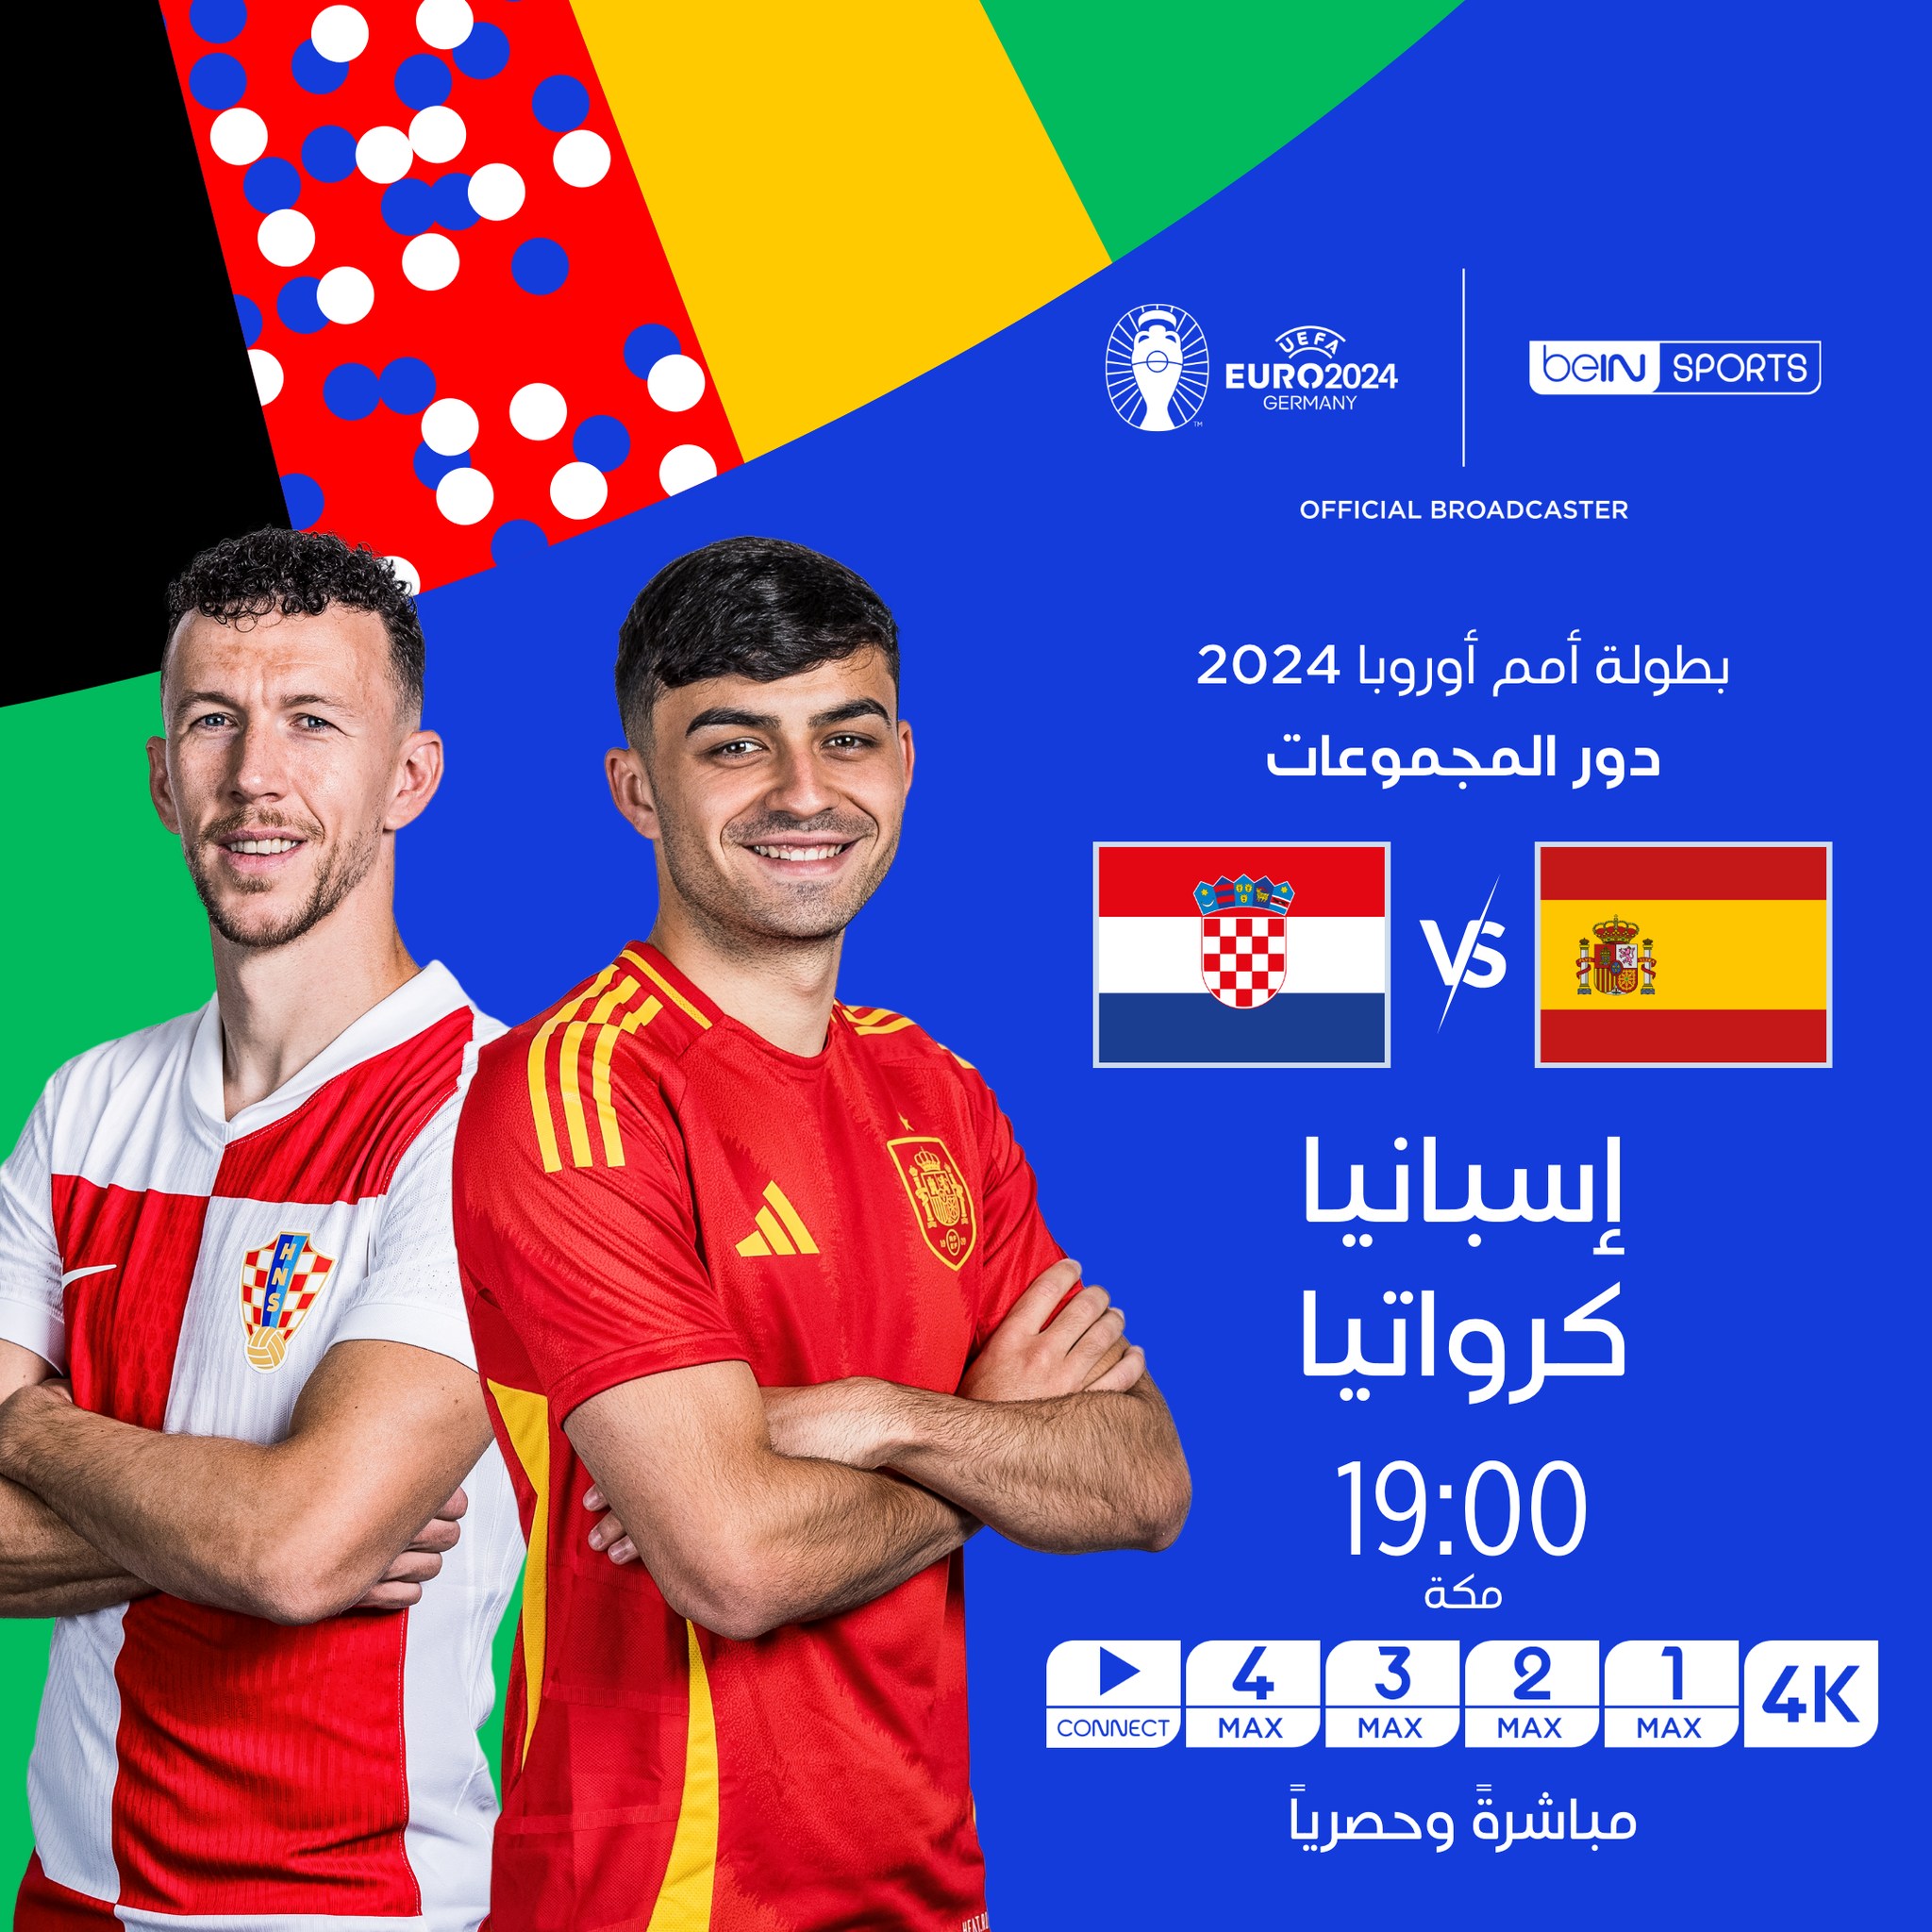 Spain vs Croatia live